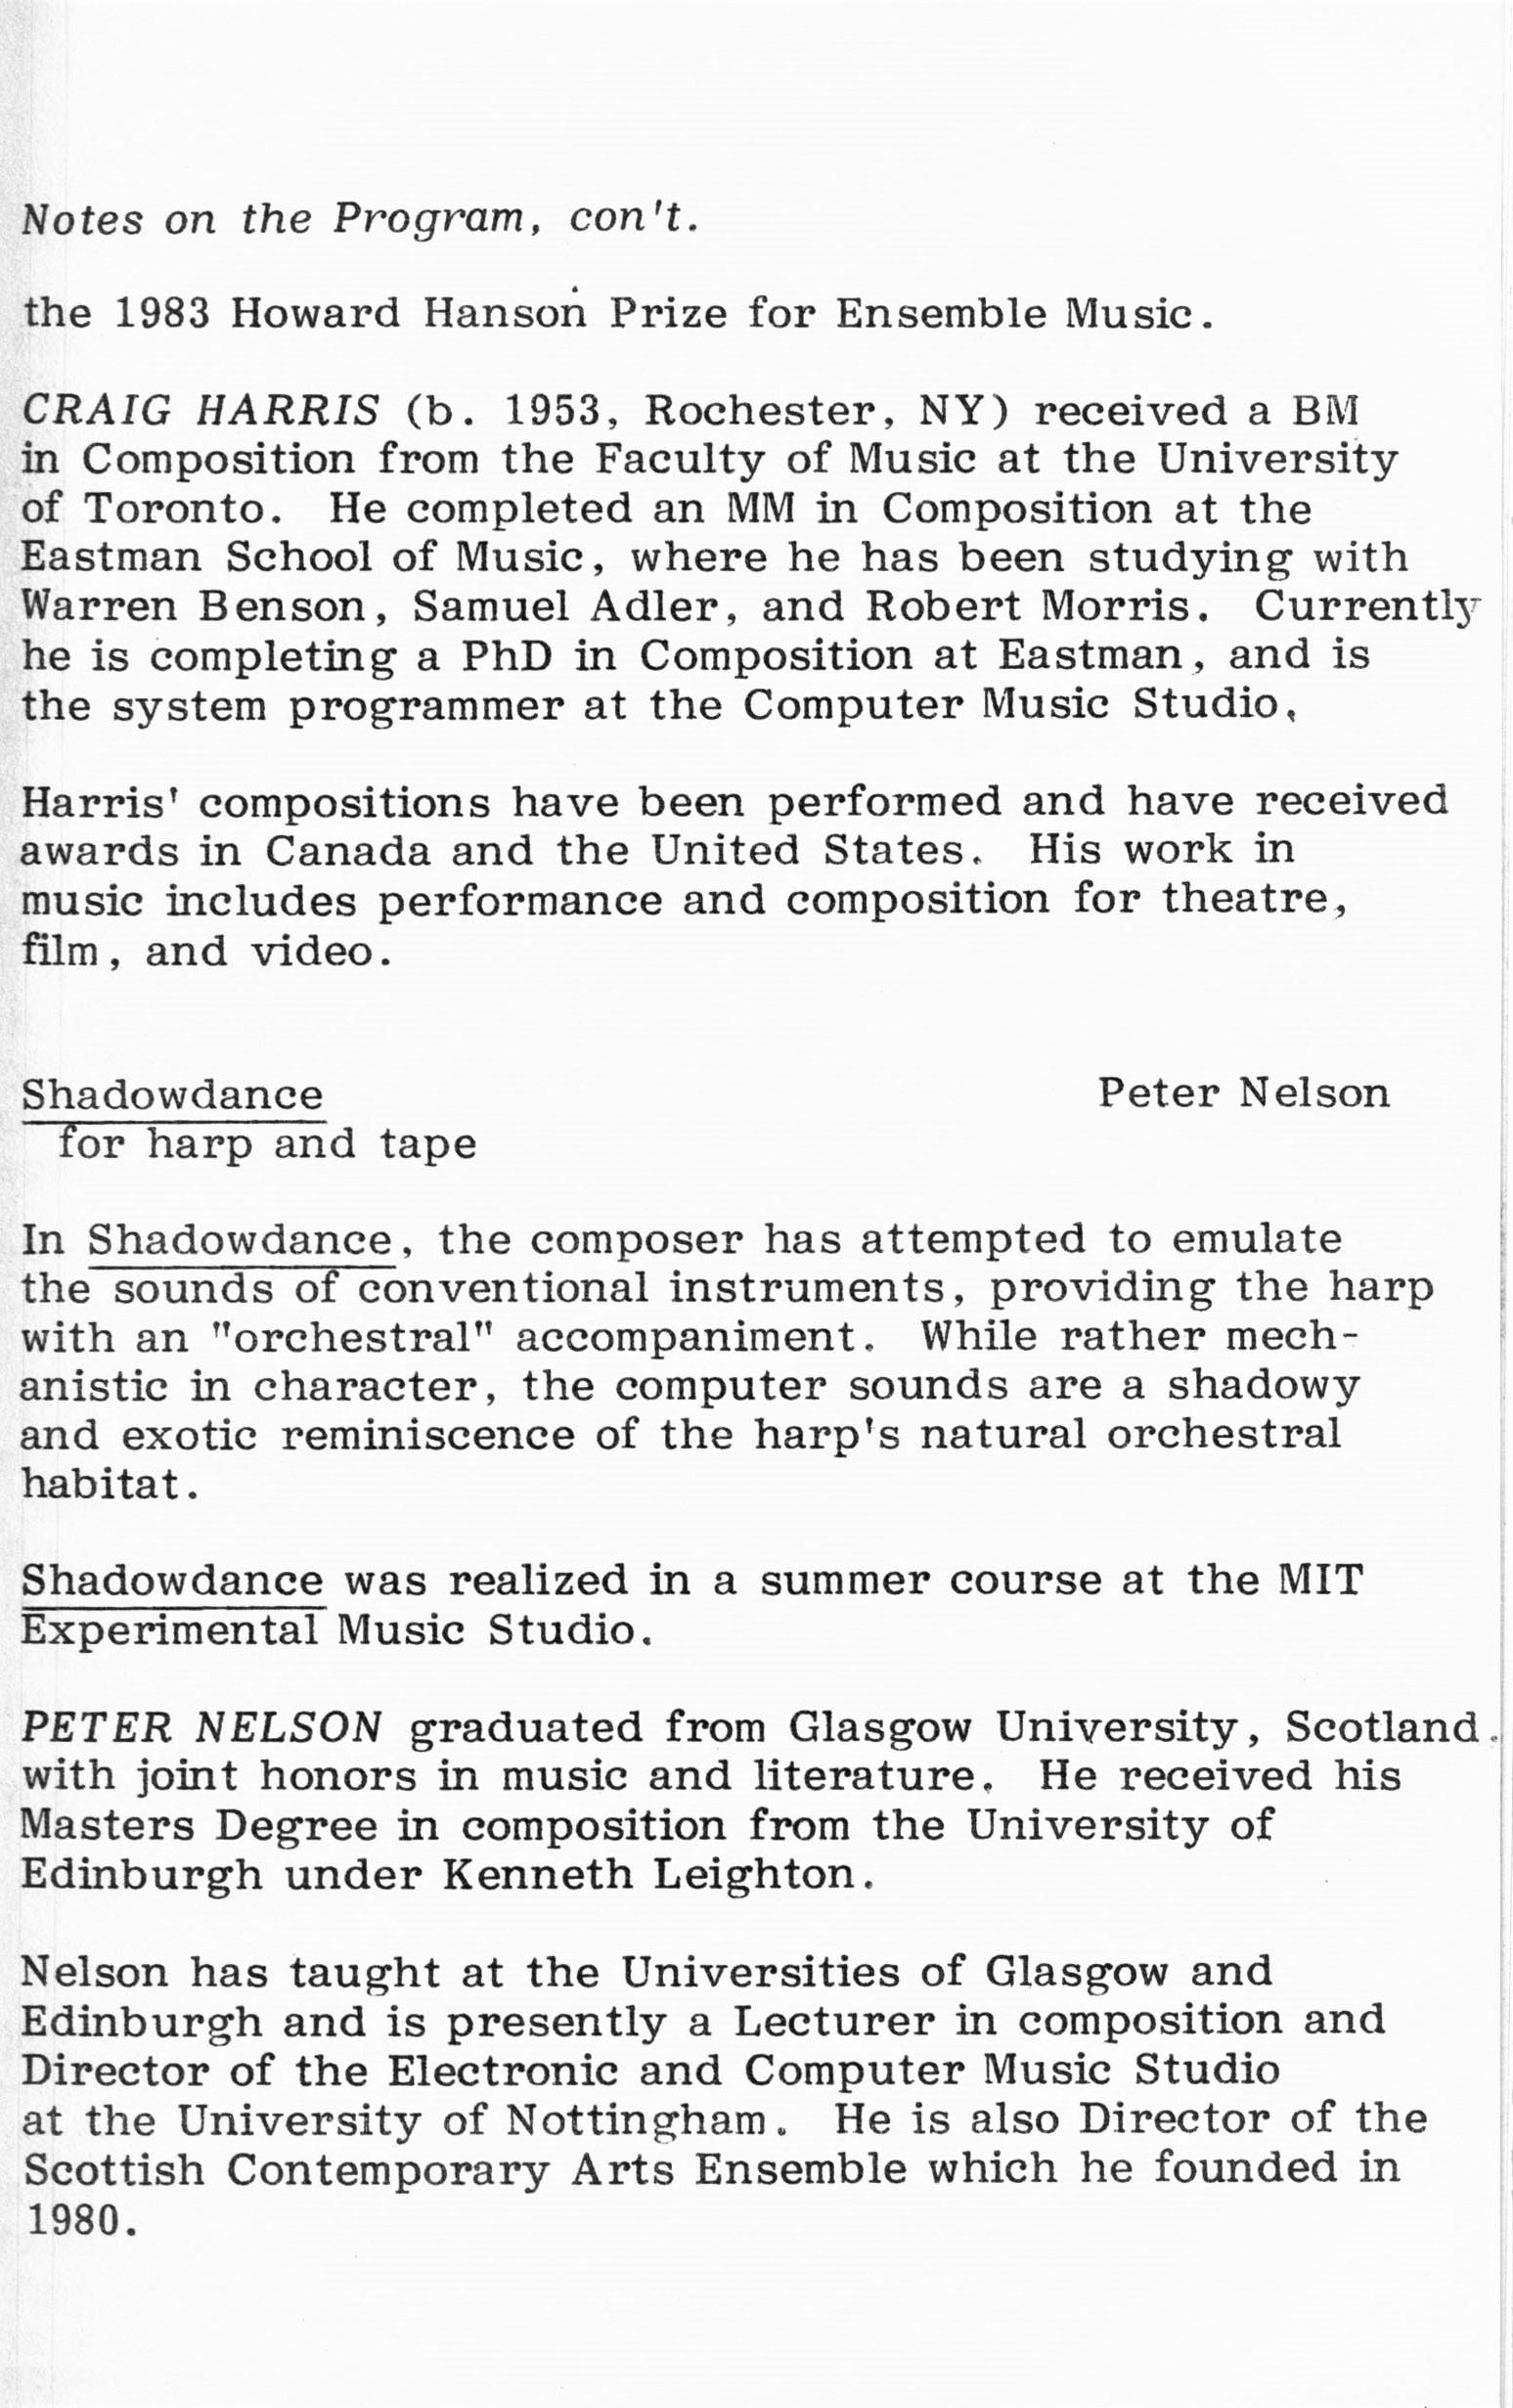 1983 ICMC Concert II program, page 07